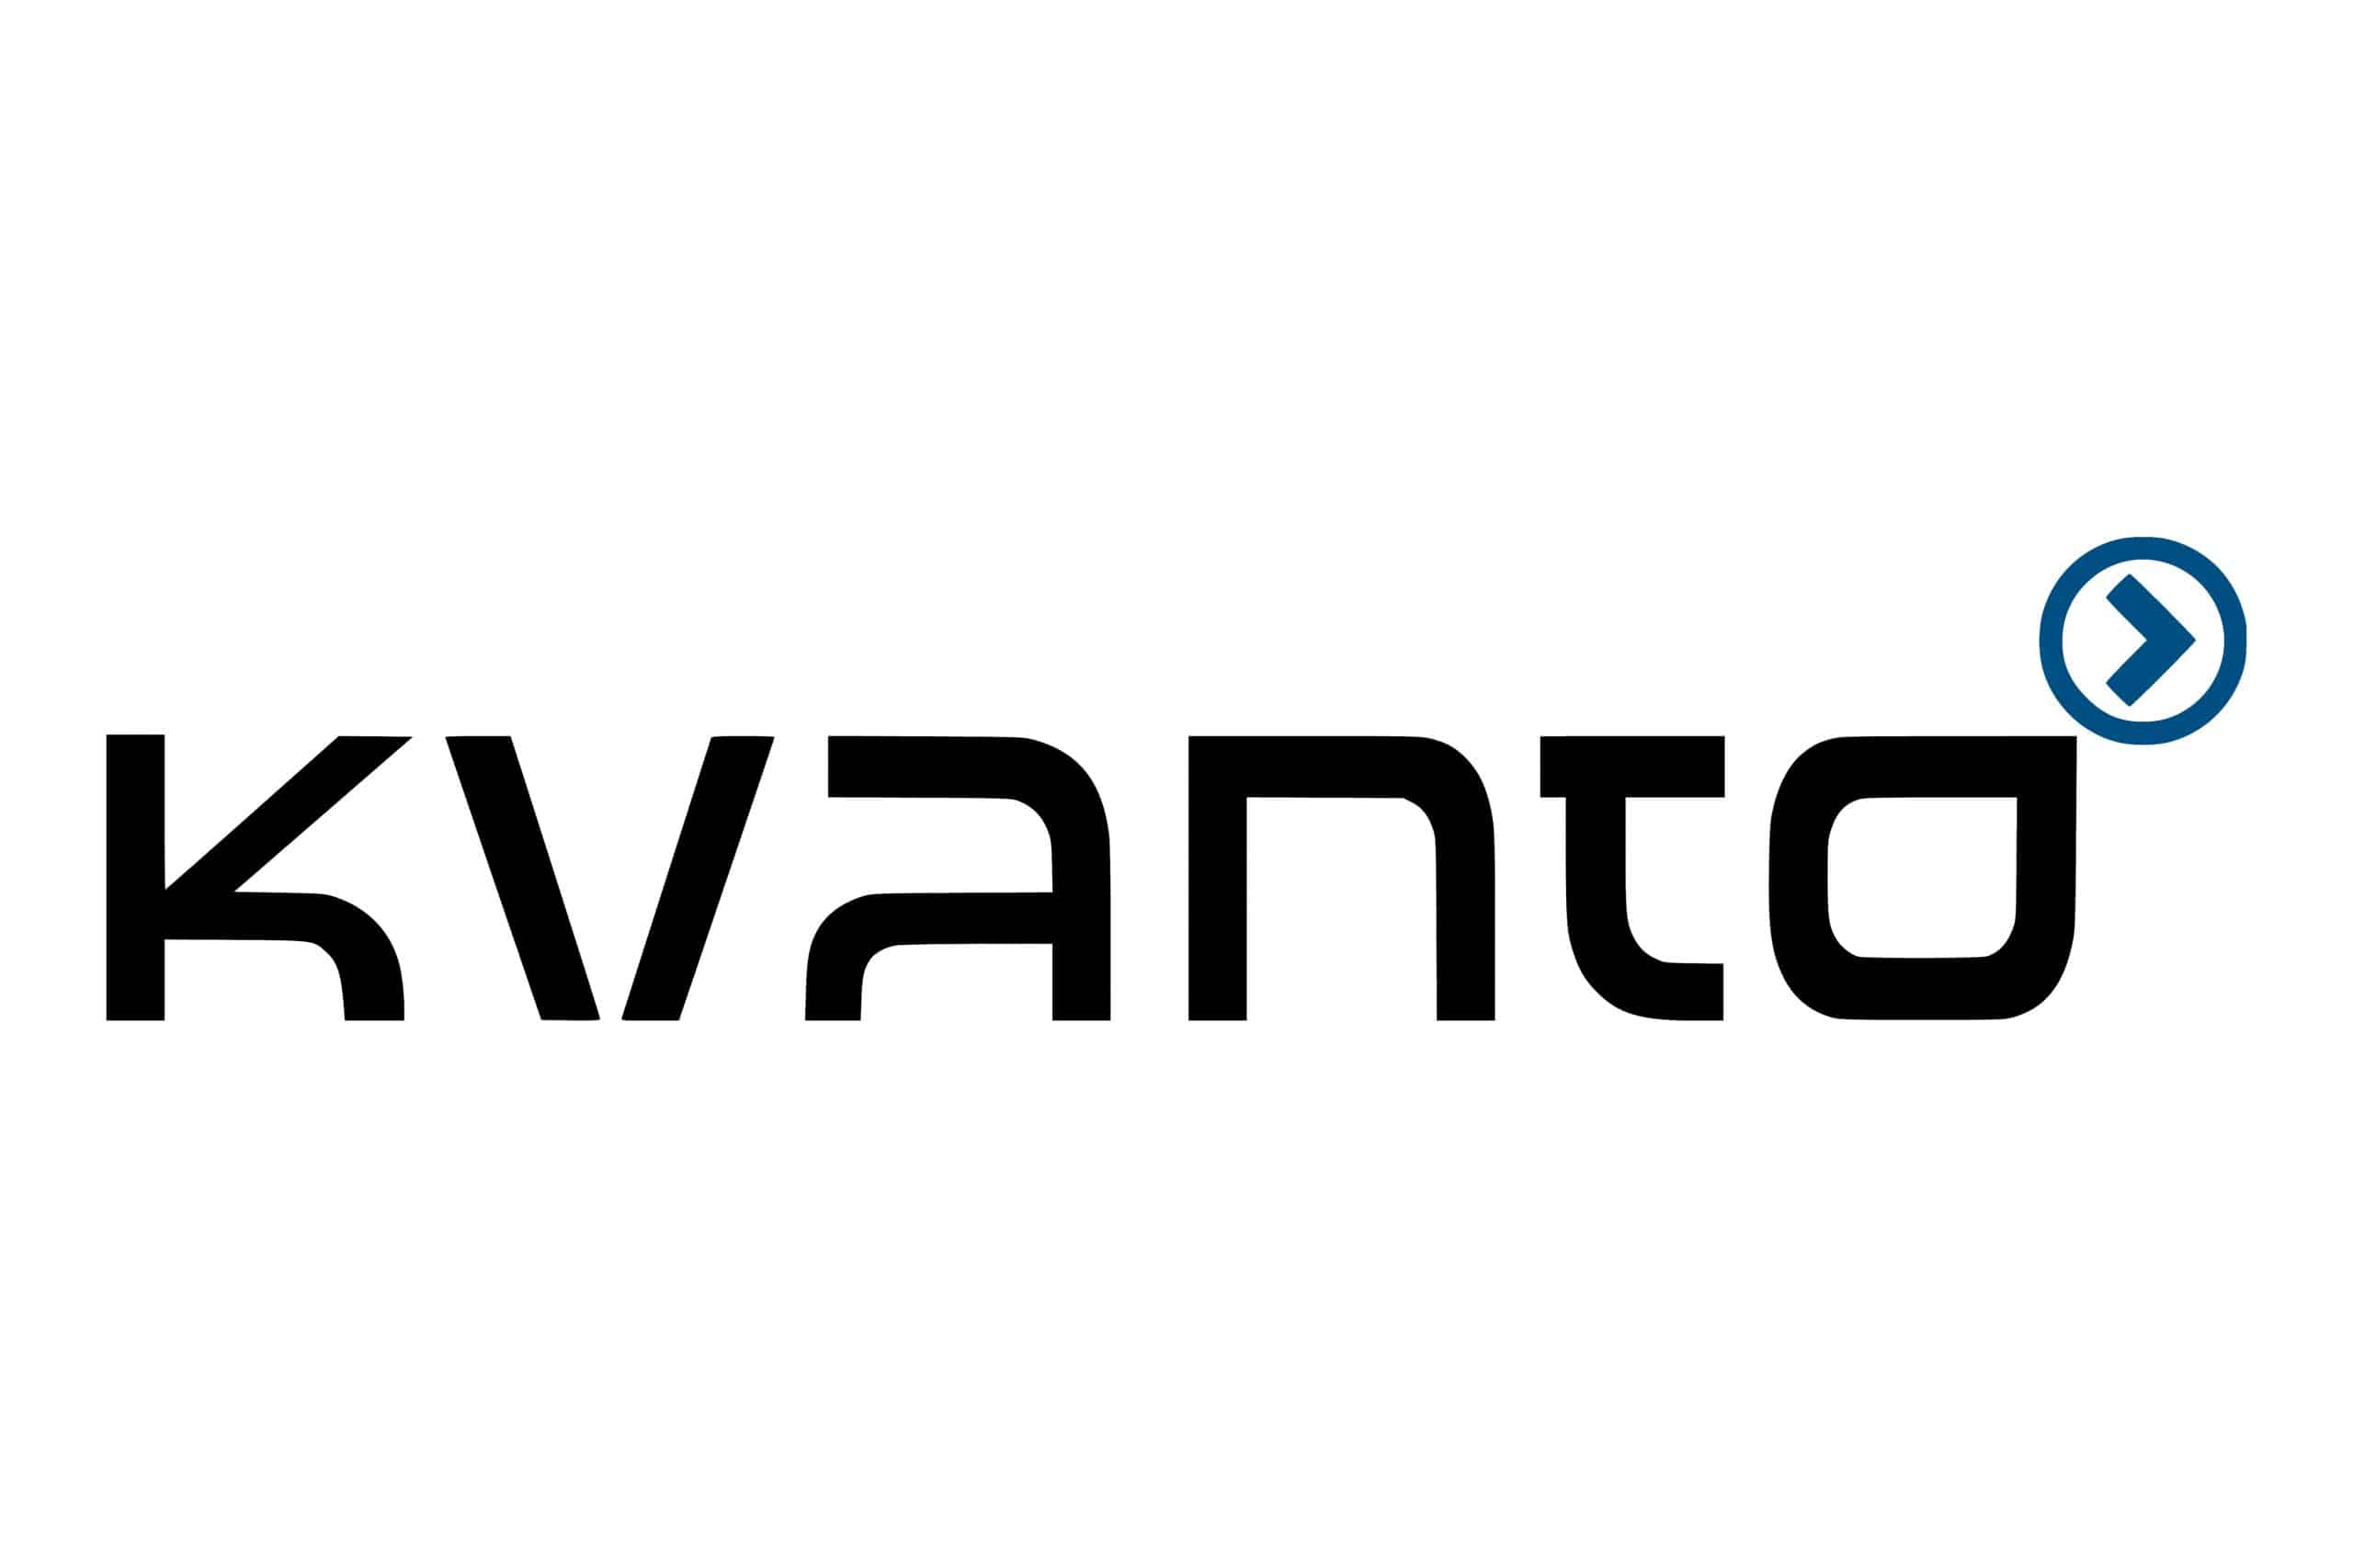 kvanto payment services appoints new Chairman